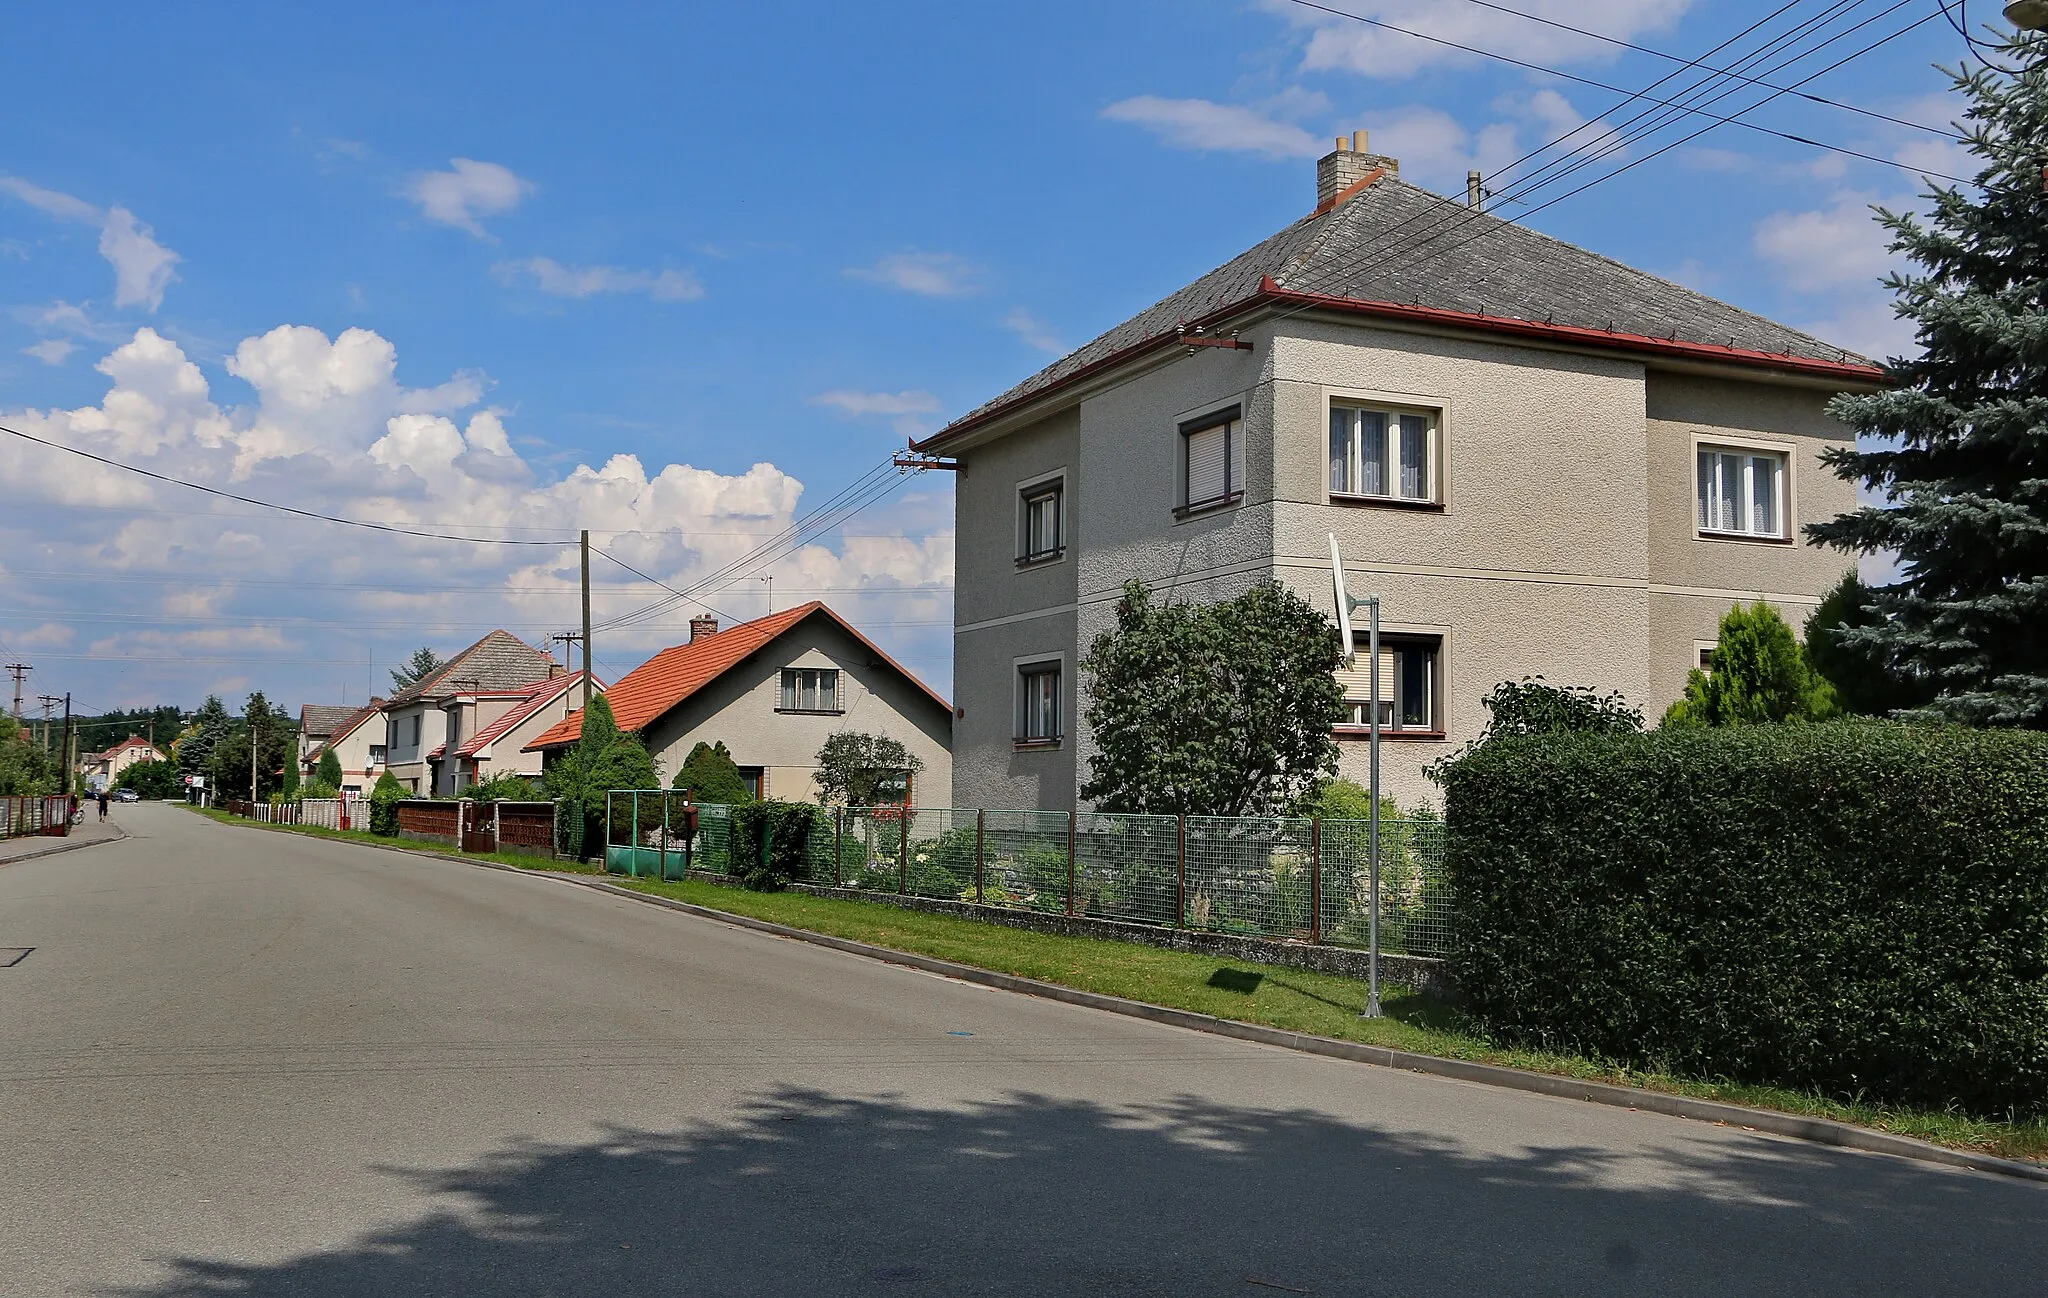 Photo showing: House No 86 in Lípa nad Orlicí, Czech Republic.